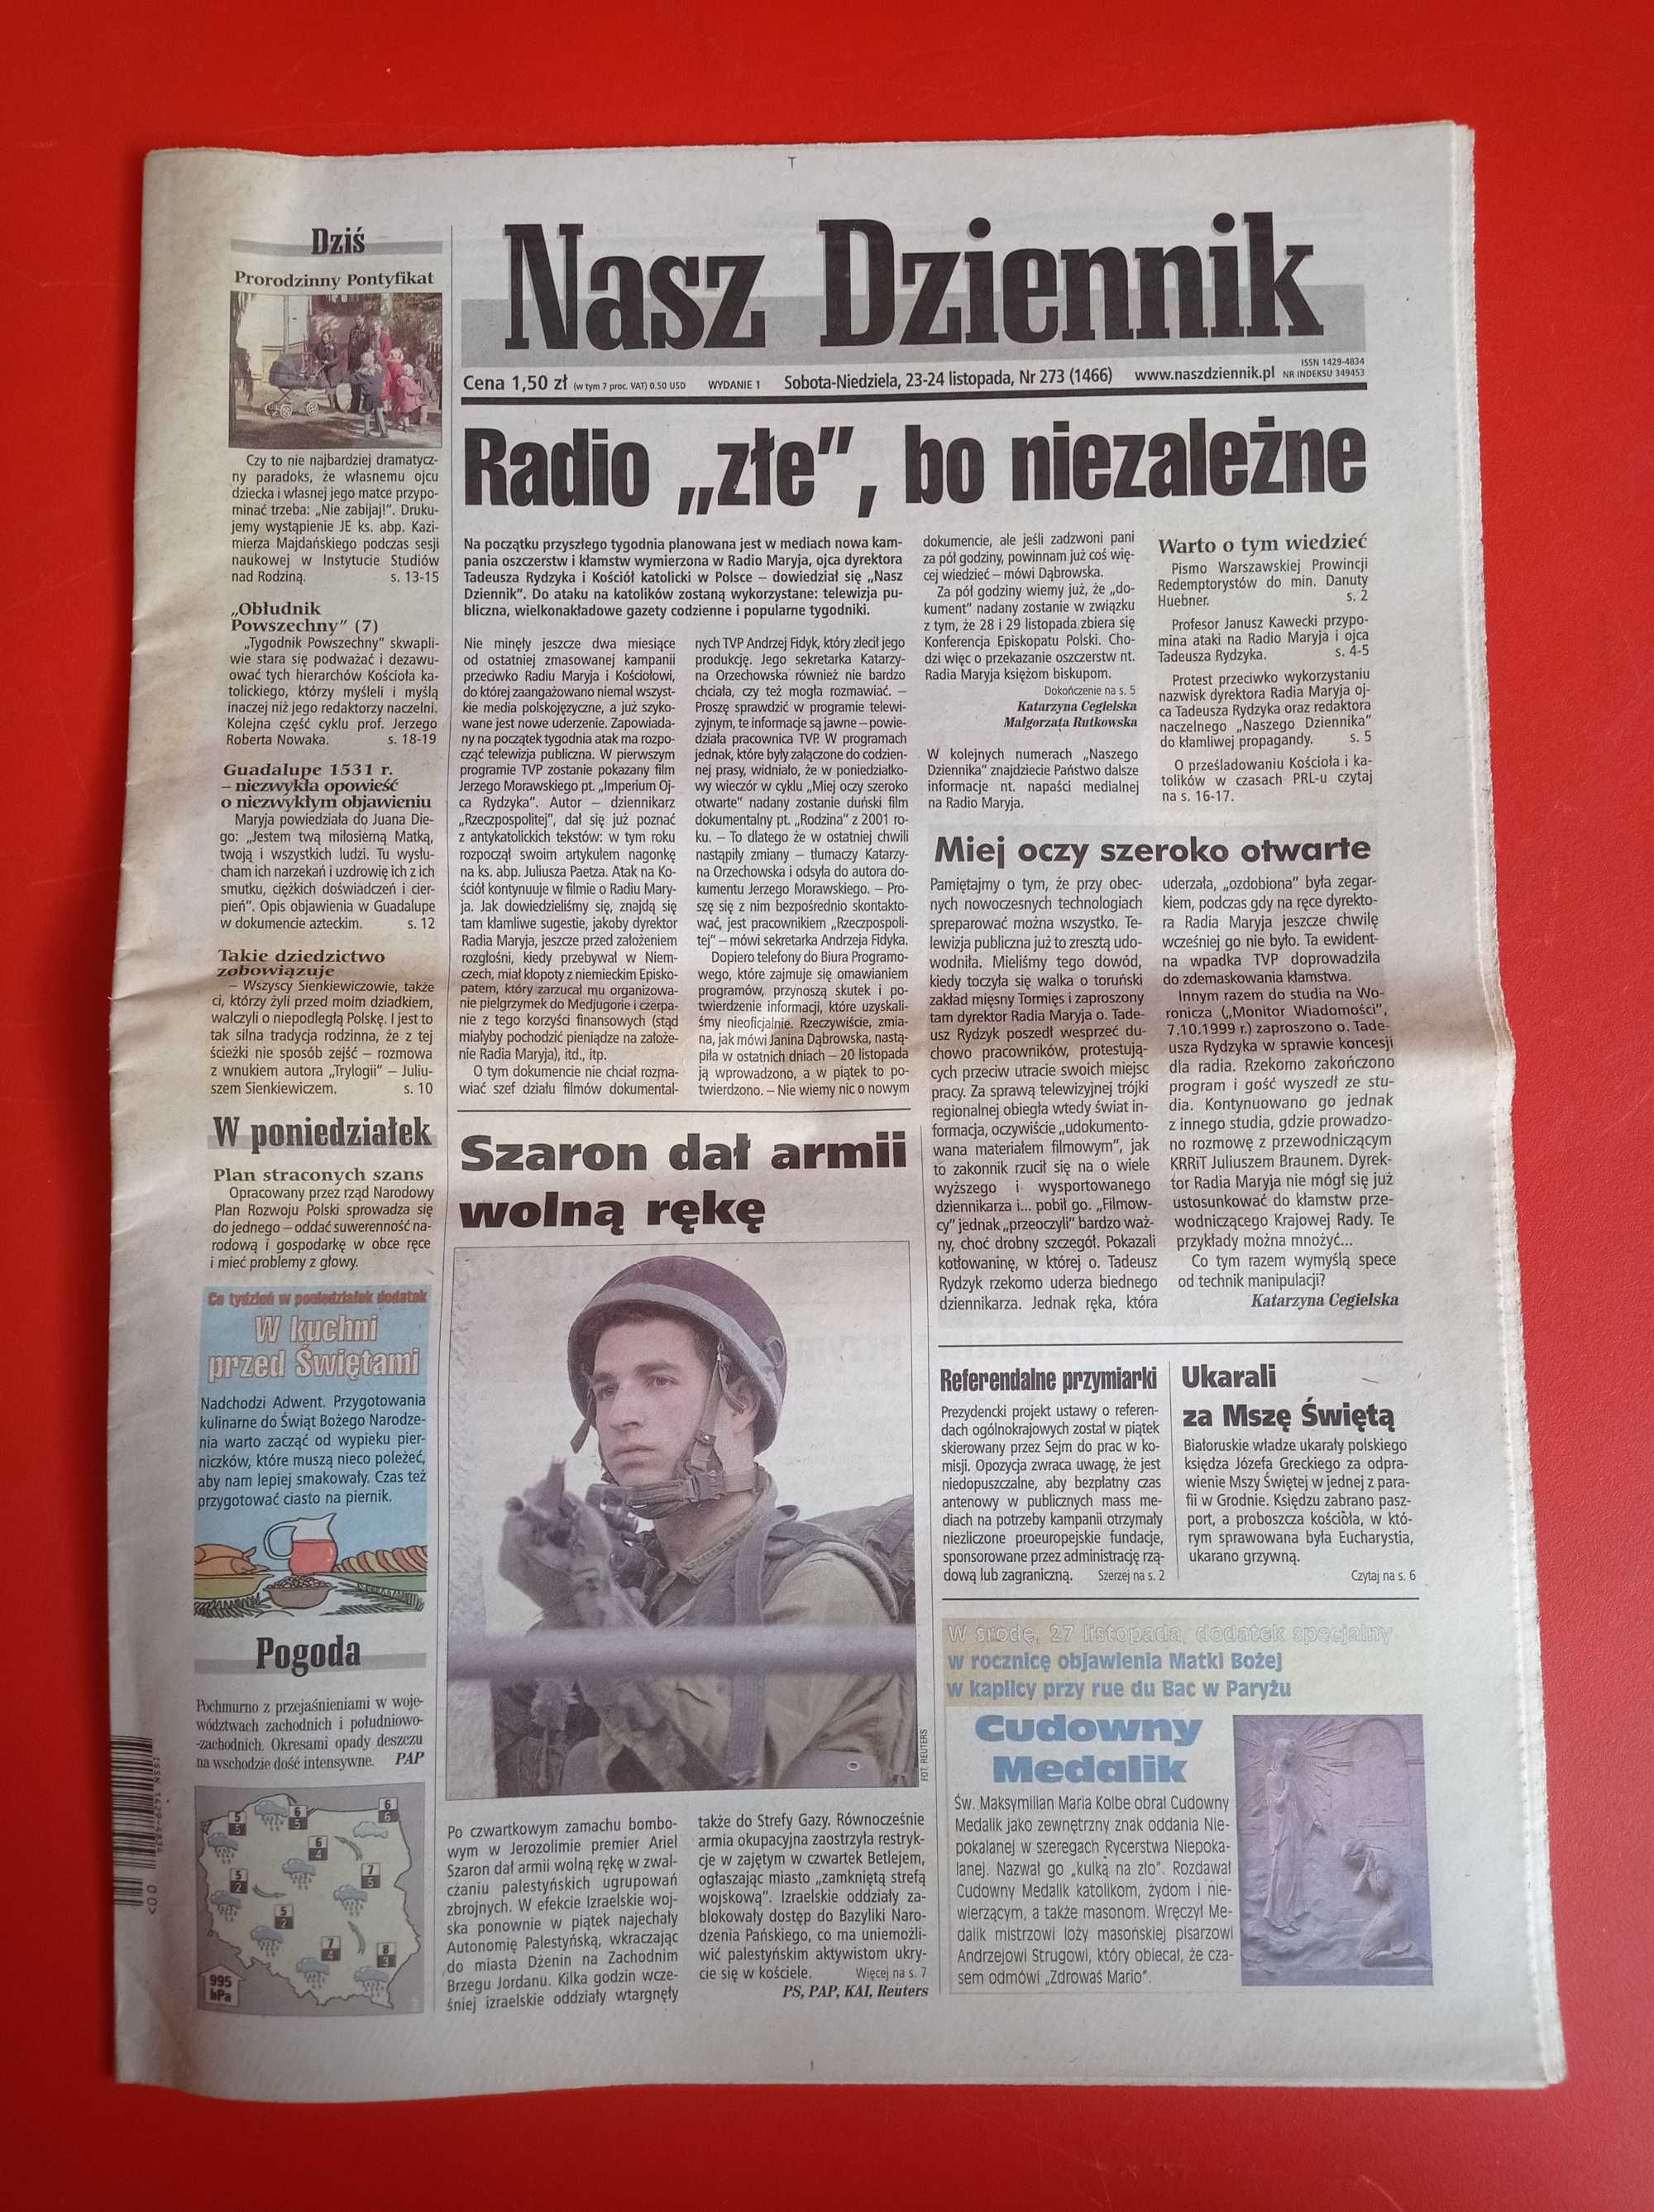 Nasz Dziennik, nr 273/2002, 23-24 listopada 2002